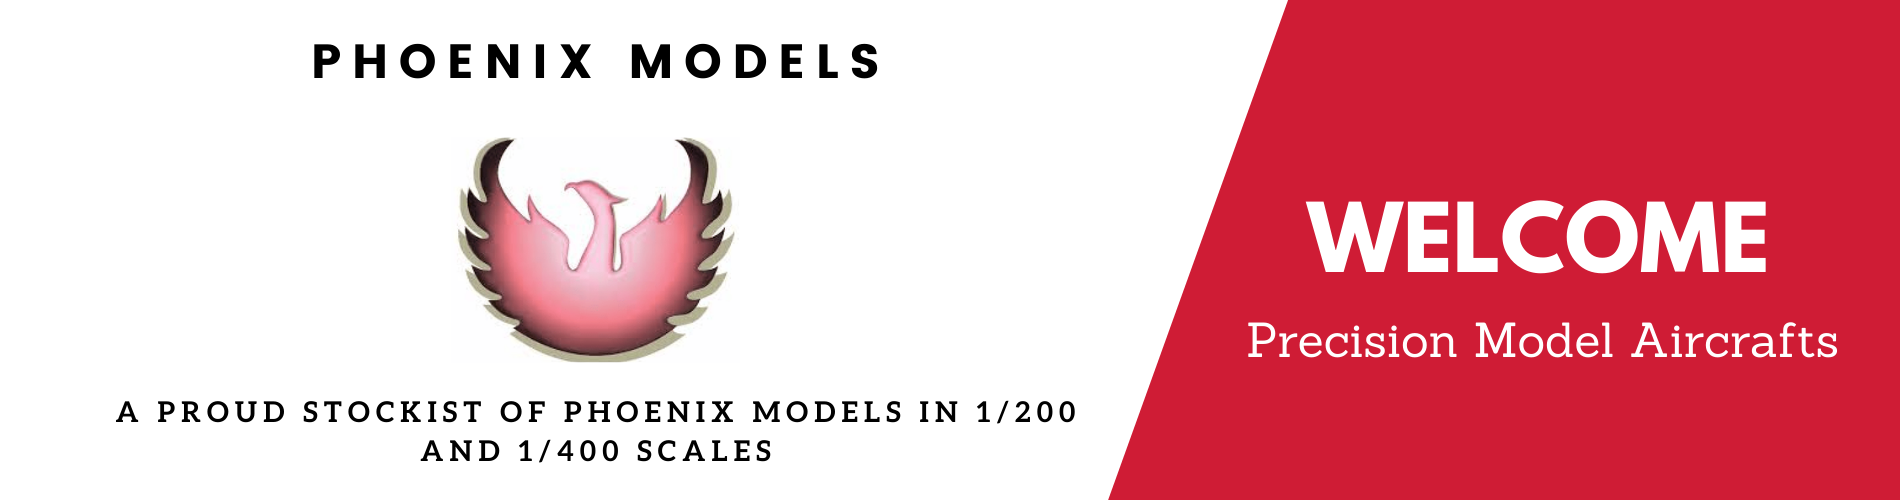 phoenix model products, phoenix models miniatures, phoenix diecast aircraft models, phoenix diecast models